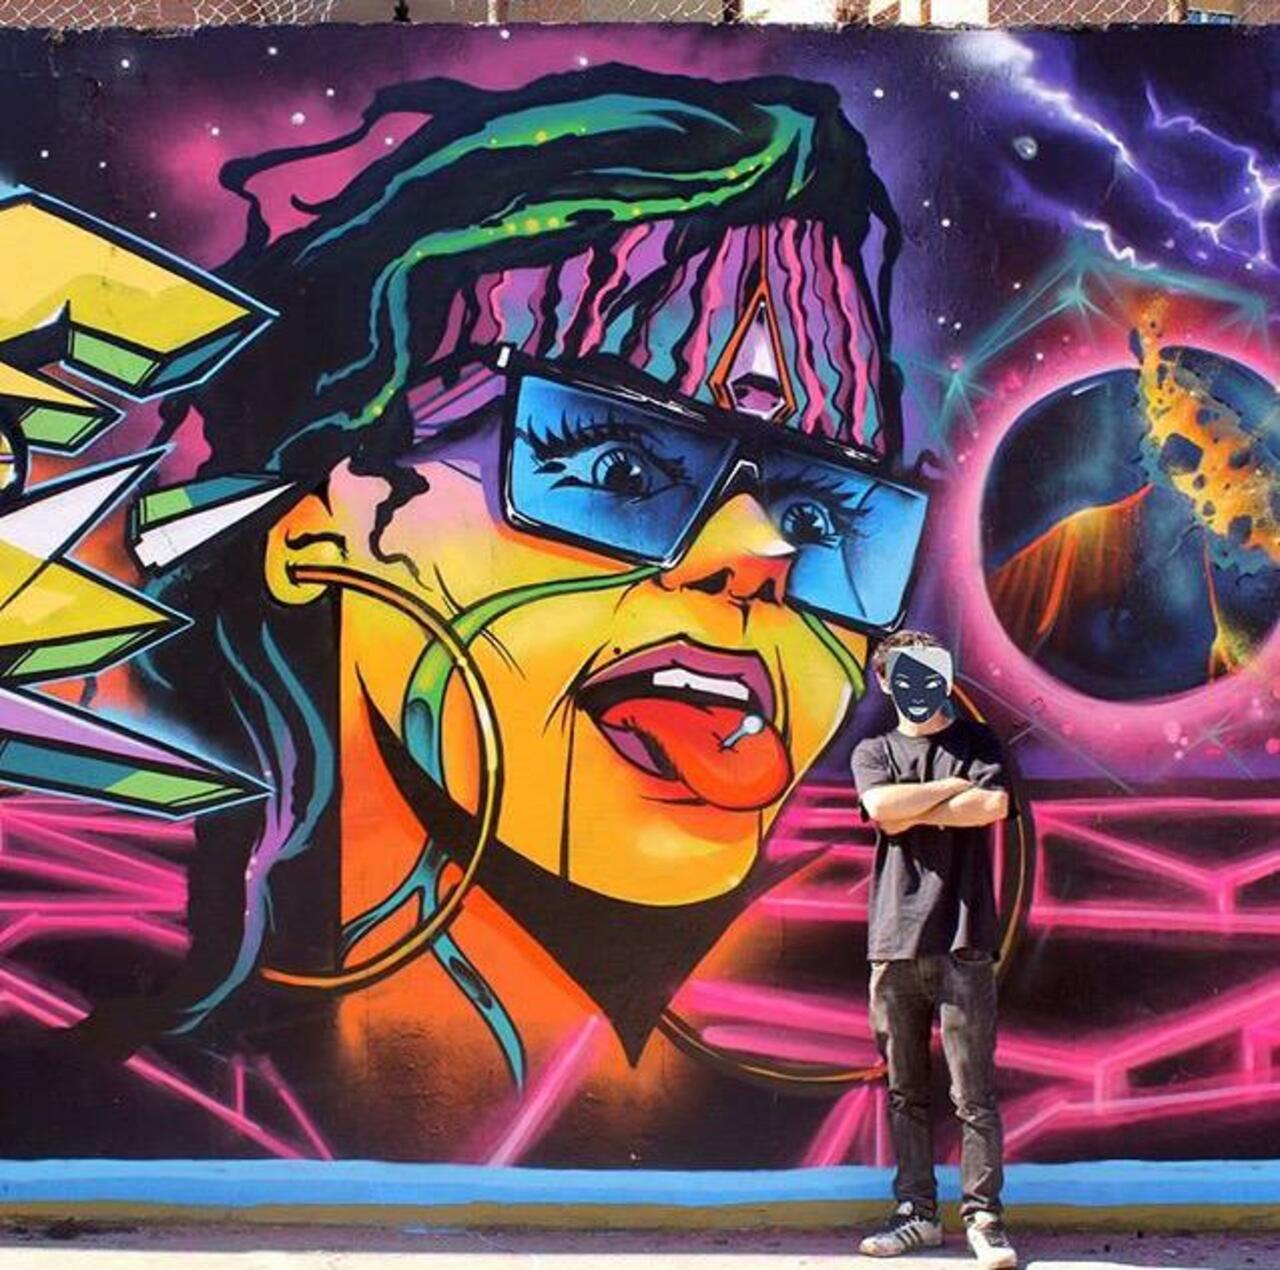 Brilliant new Street Art by the artist Jaycaes

#art #graffiti #mural #streetart http://t.co/23HGNhWnYv